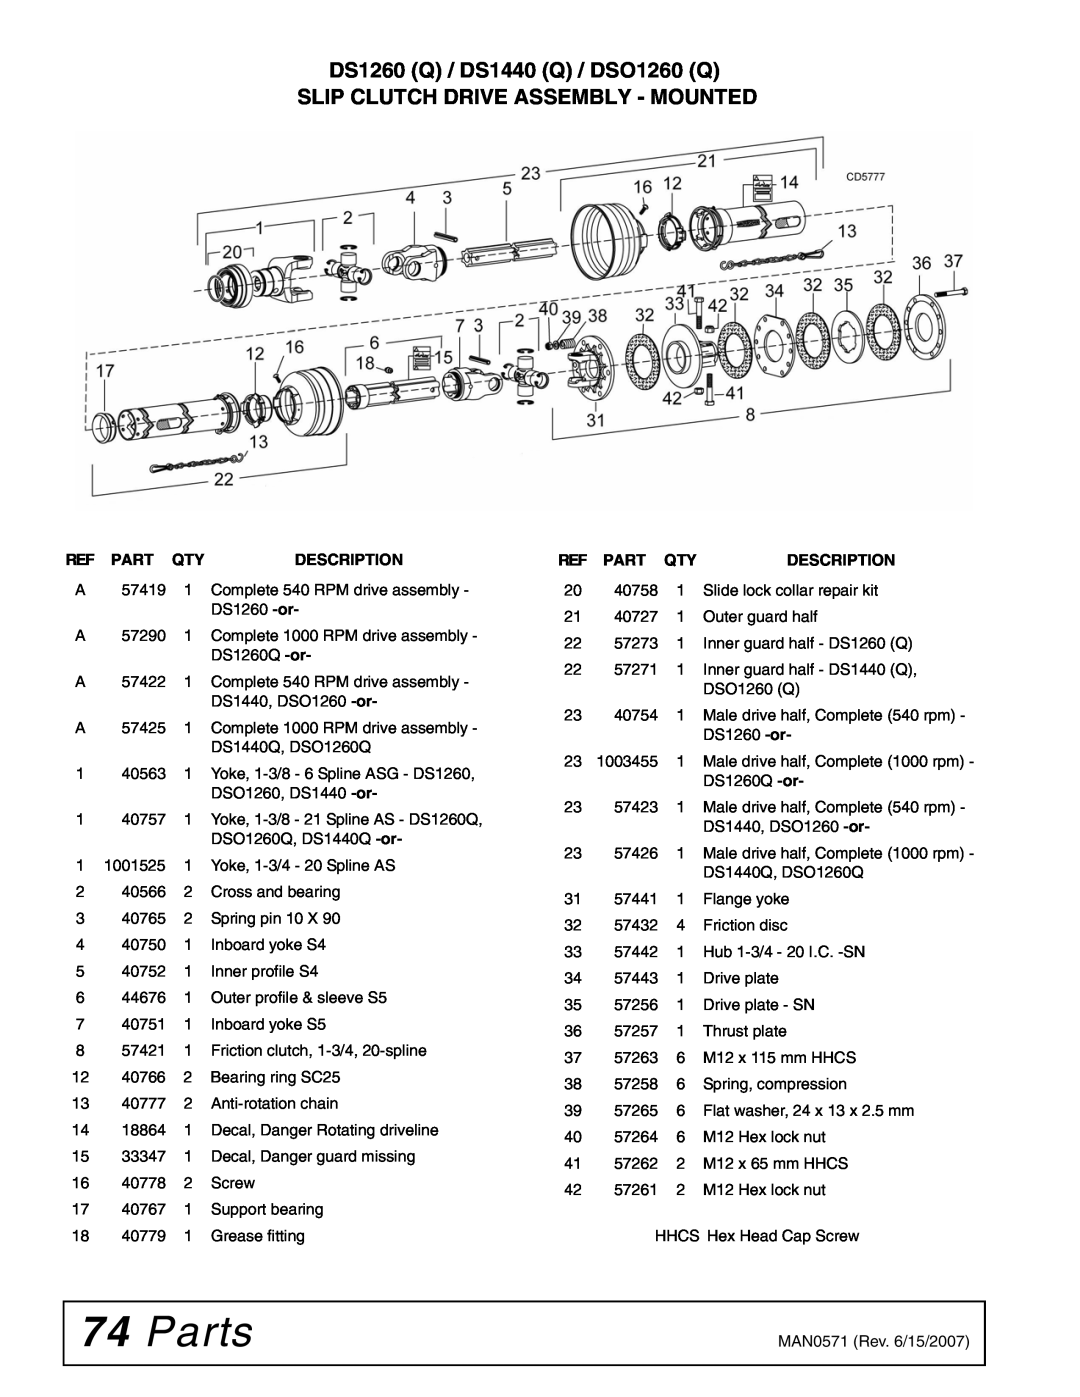 Woods Equipment DSO1260Q manual Parts, DS1260 Q / DS1440 Q / DSO1260 Q SLIP CLUTCH DRIVE ASSEMBLY - MOUNTED, Description 